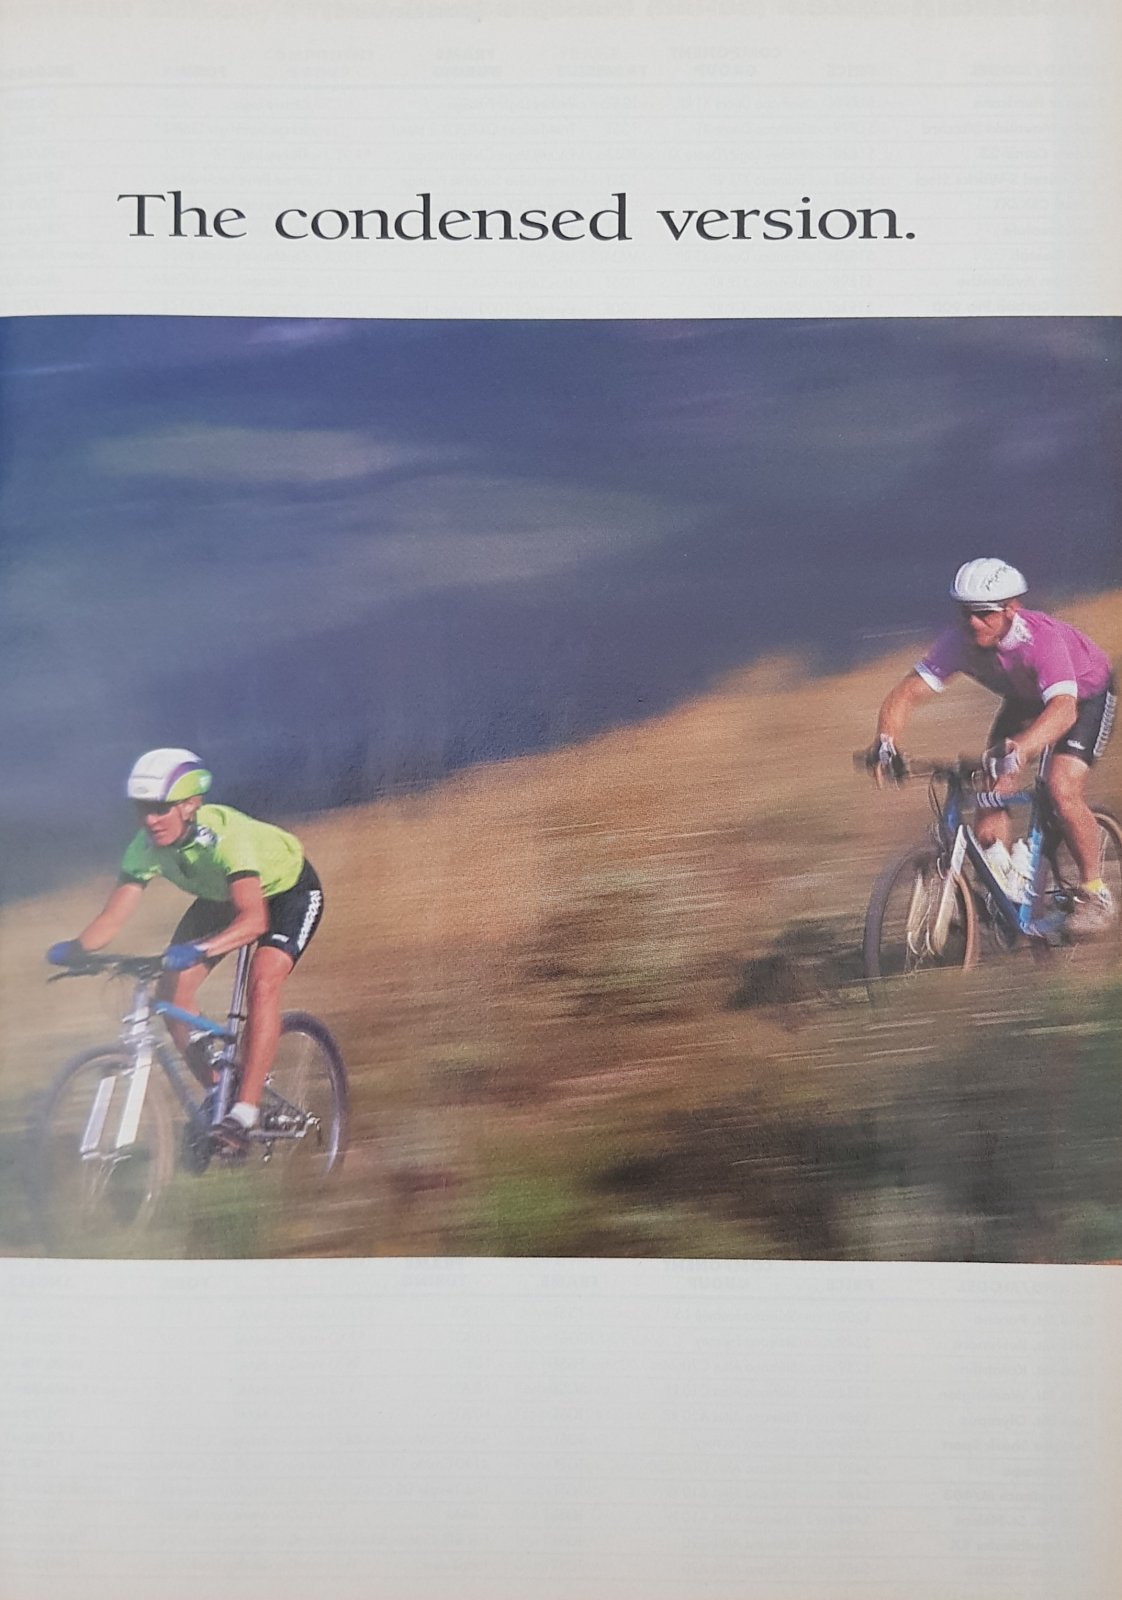 Mongoose Ad Bicycling 1993.jpg